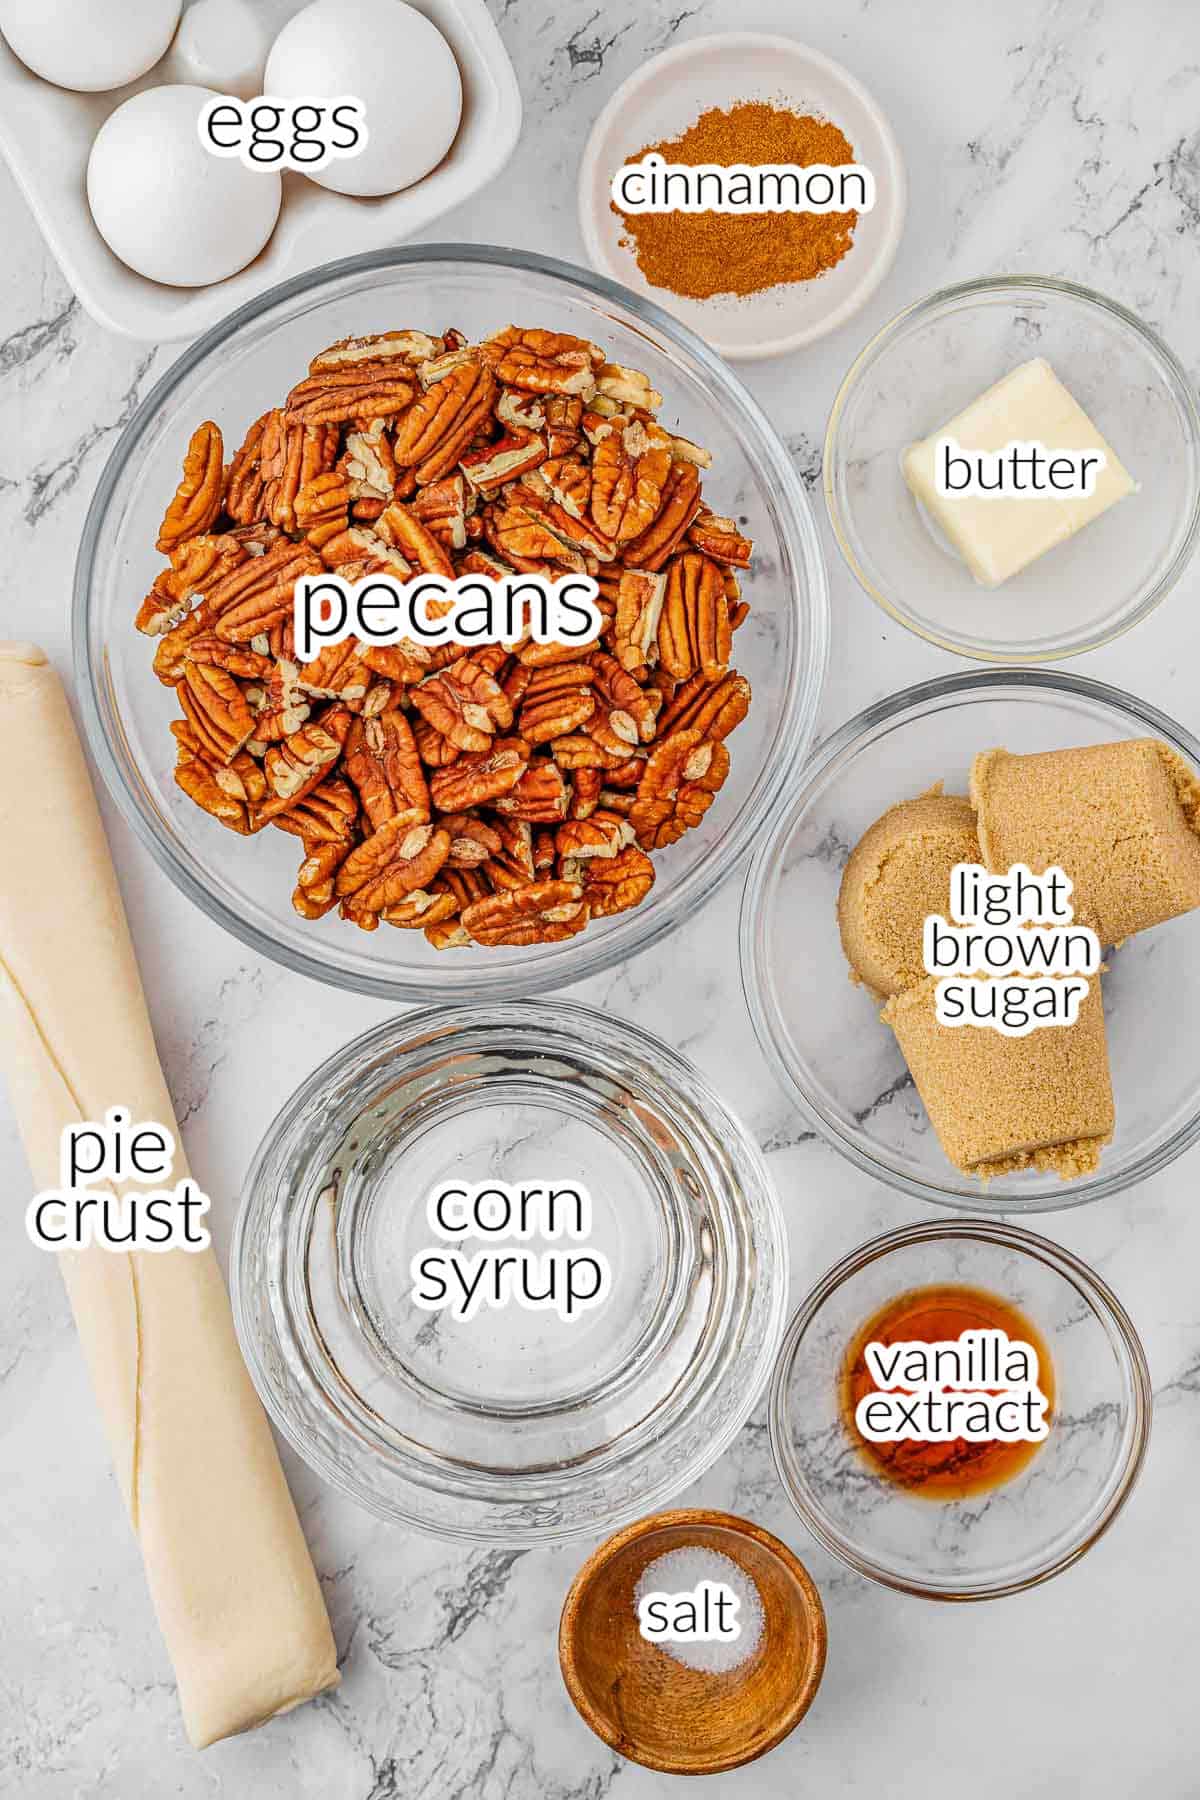 ingredients for pecan pie - pecans, eggs, cinnamon, butter, light brown sugar, pie crust, corn syrup, salt and vanilla extract.